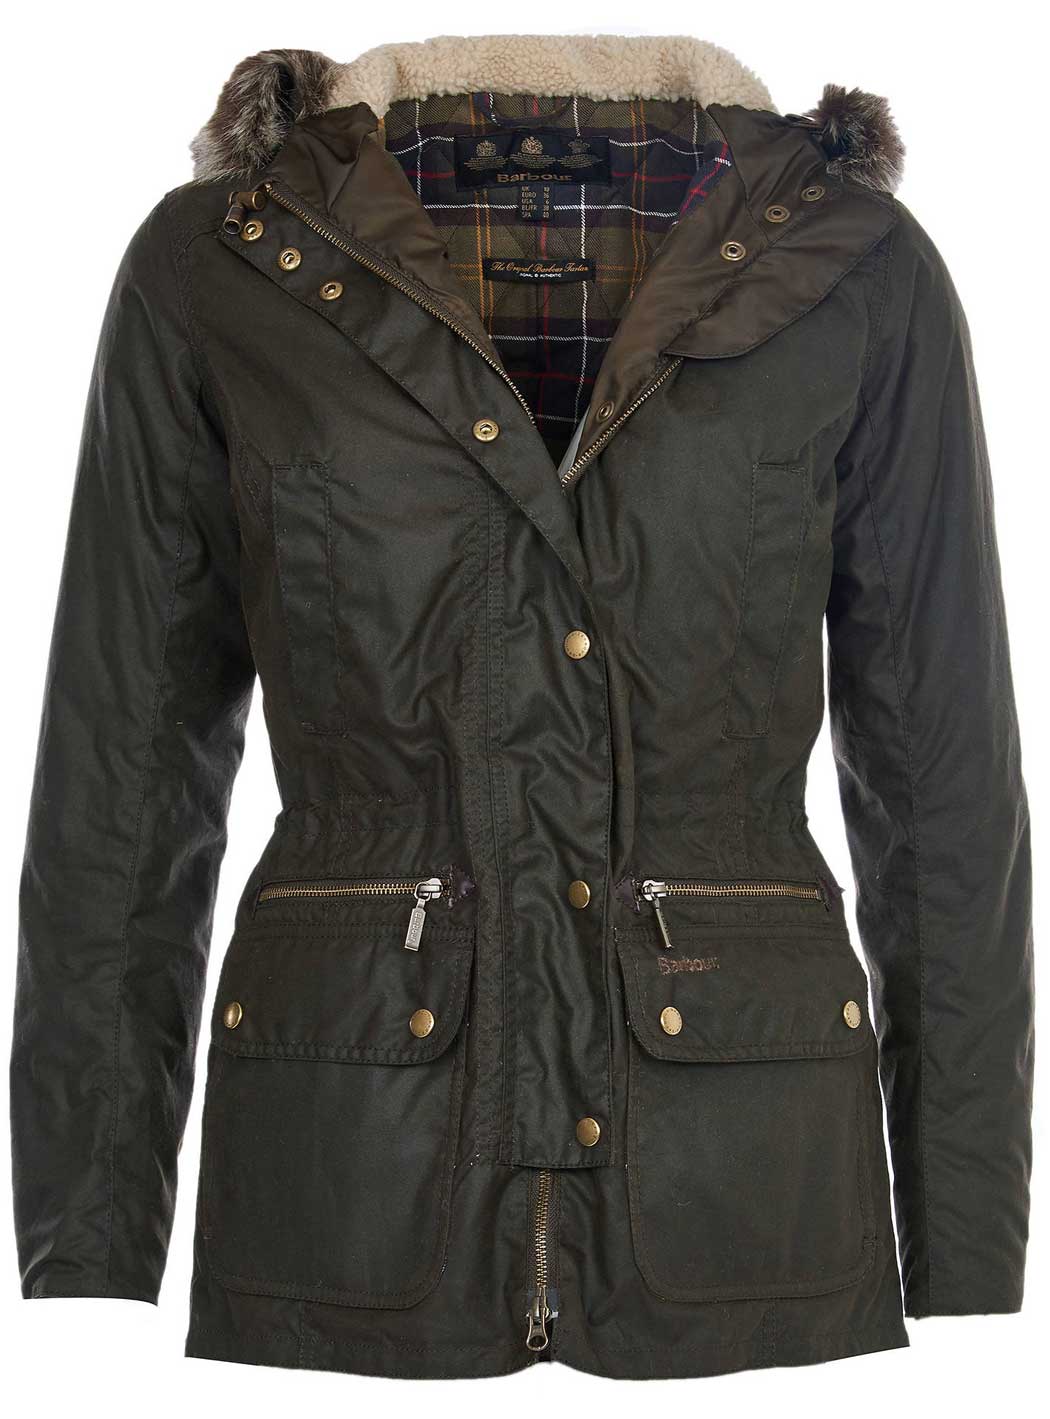 BARBOUR Wax Jacket - Ladies Kelsall Parka - Olive